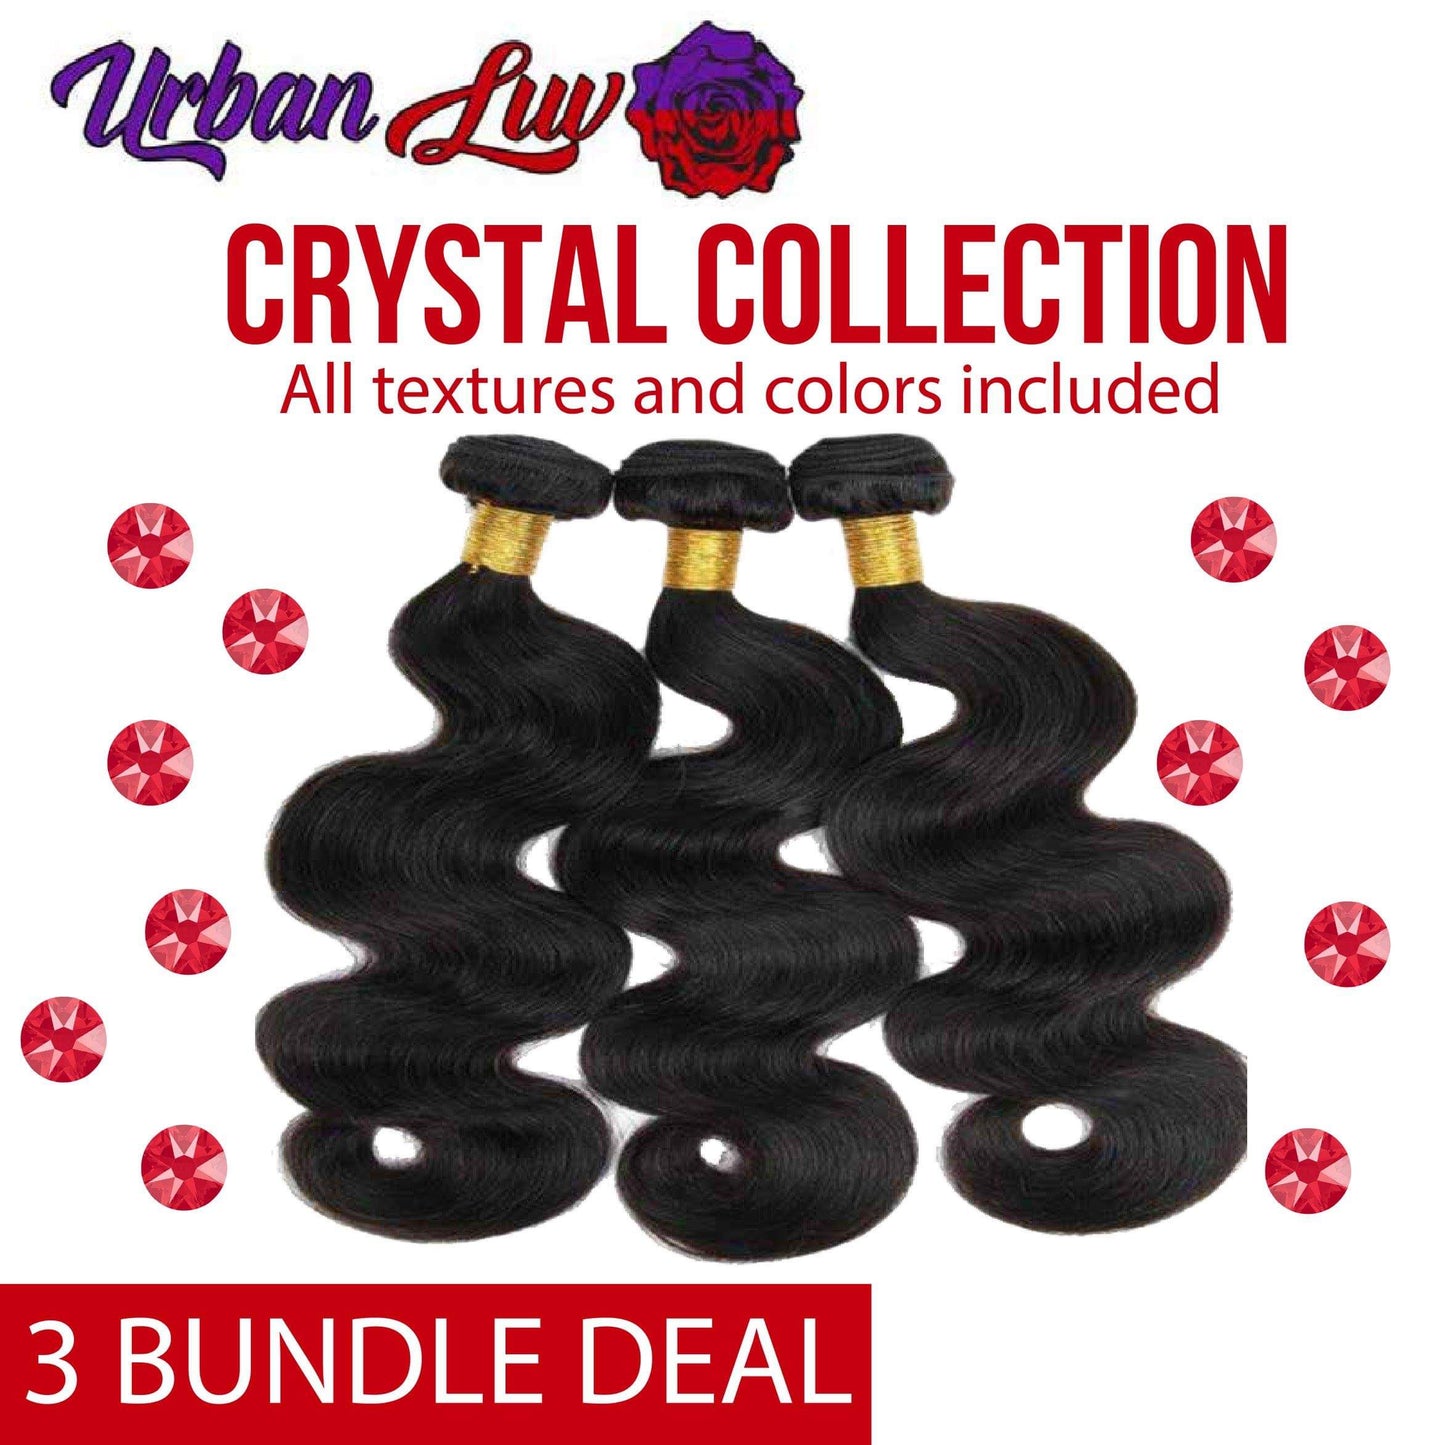 Crystal Collection 3 Virgin Bundle Deals All Textures